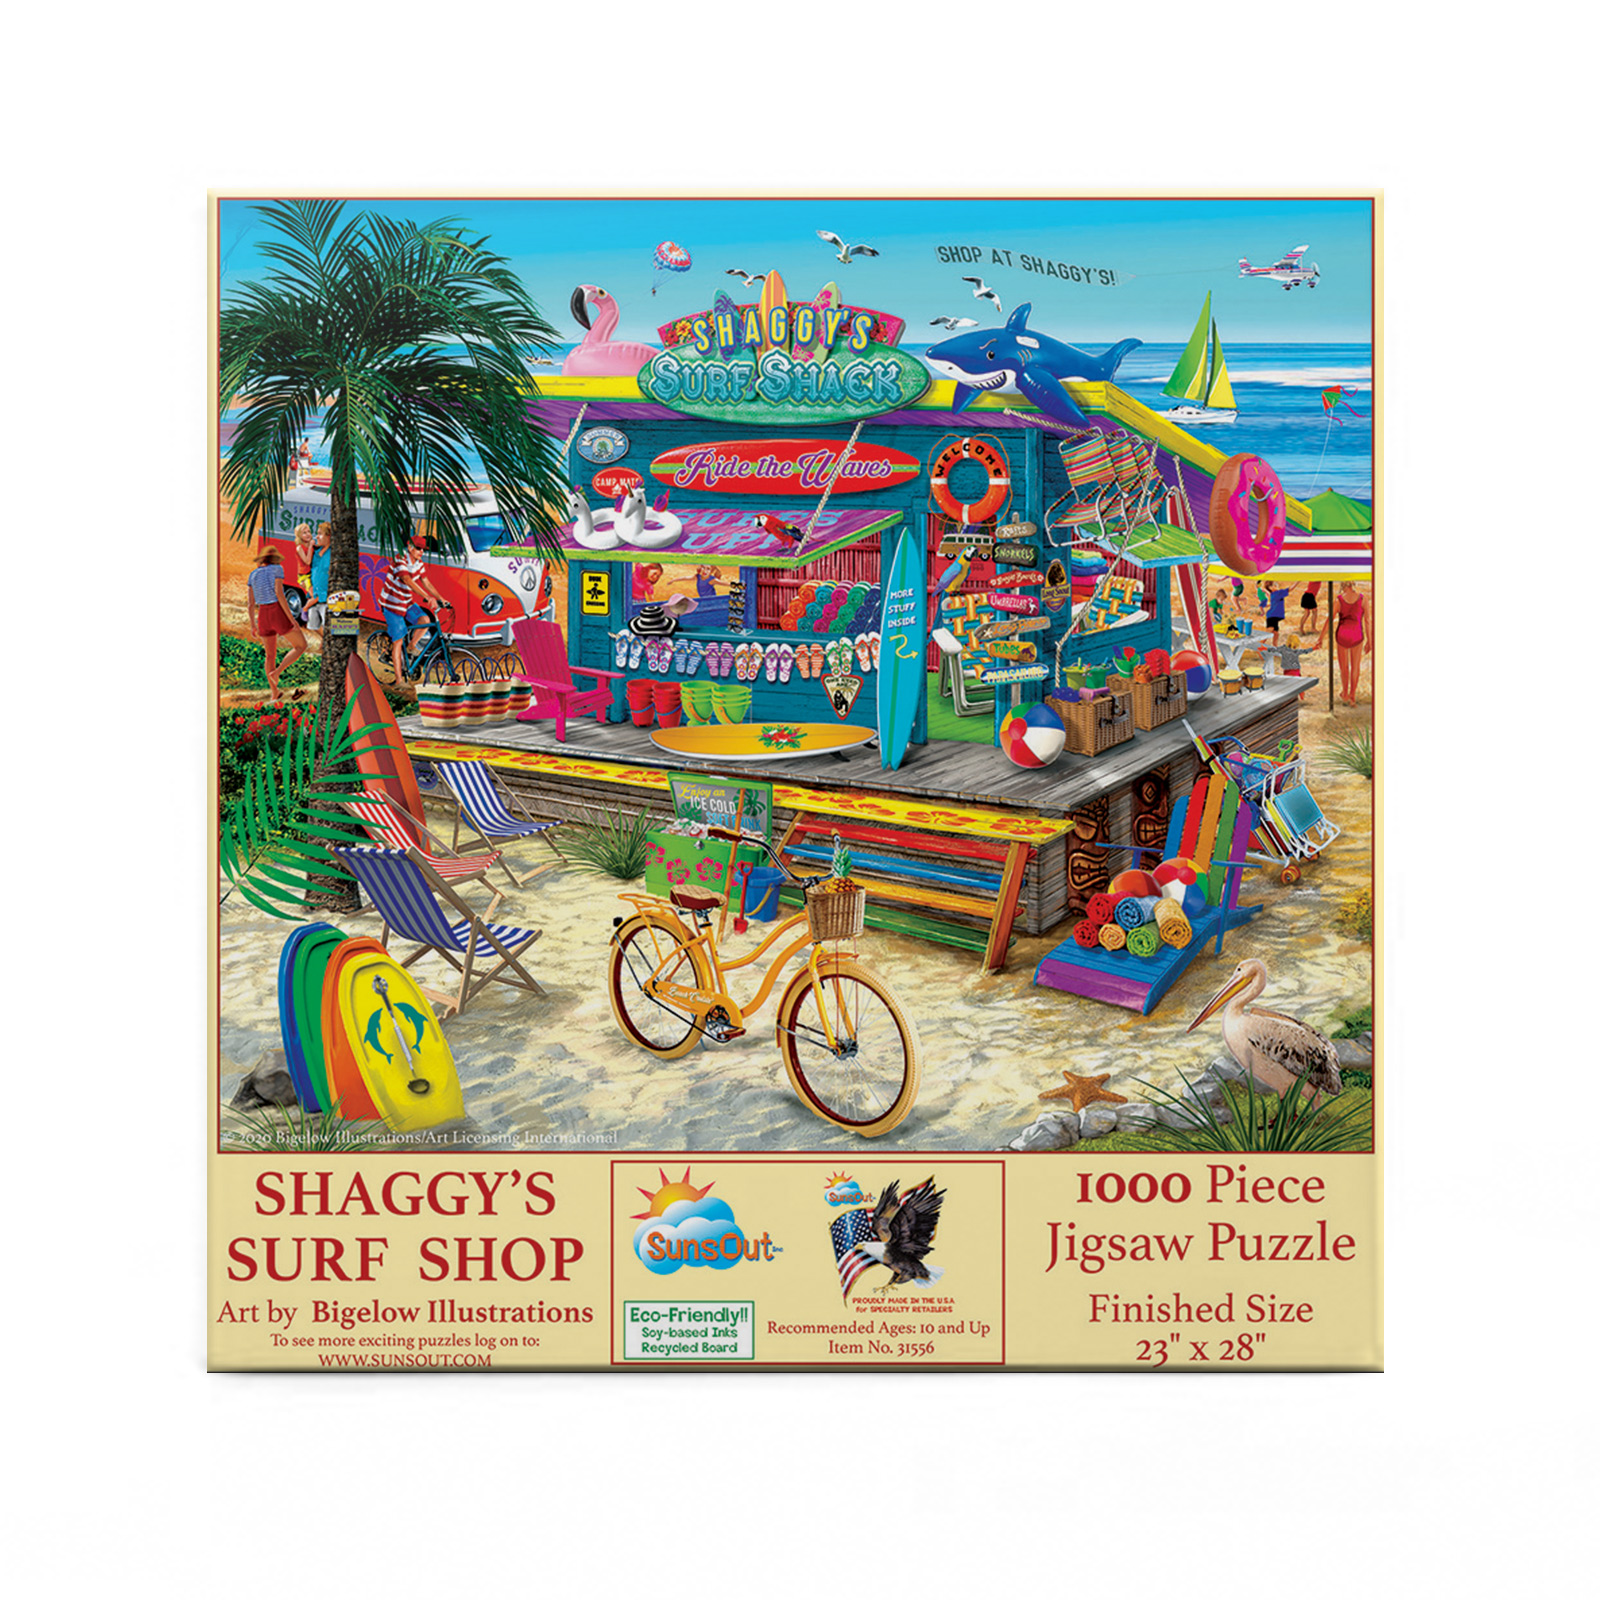 Shaggy's Surf Shop